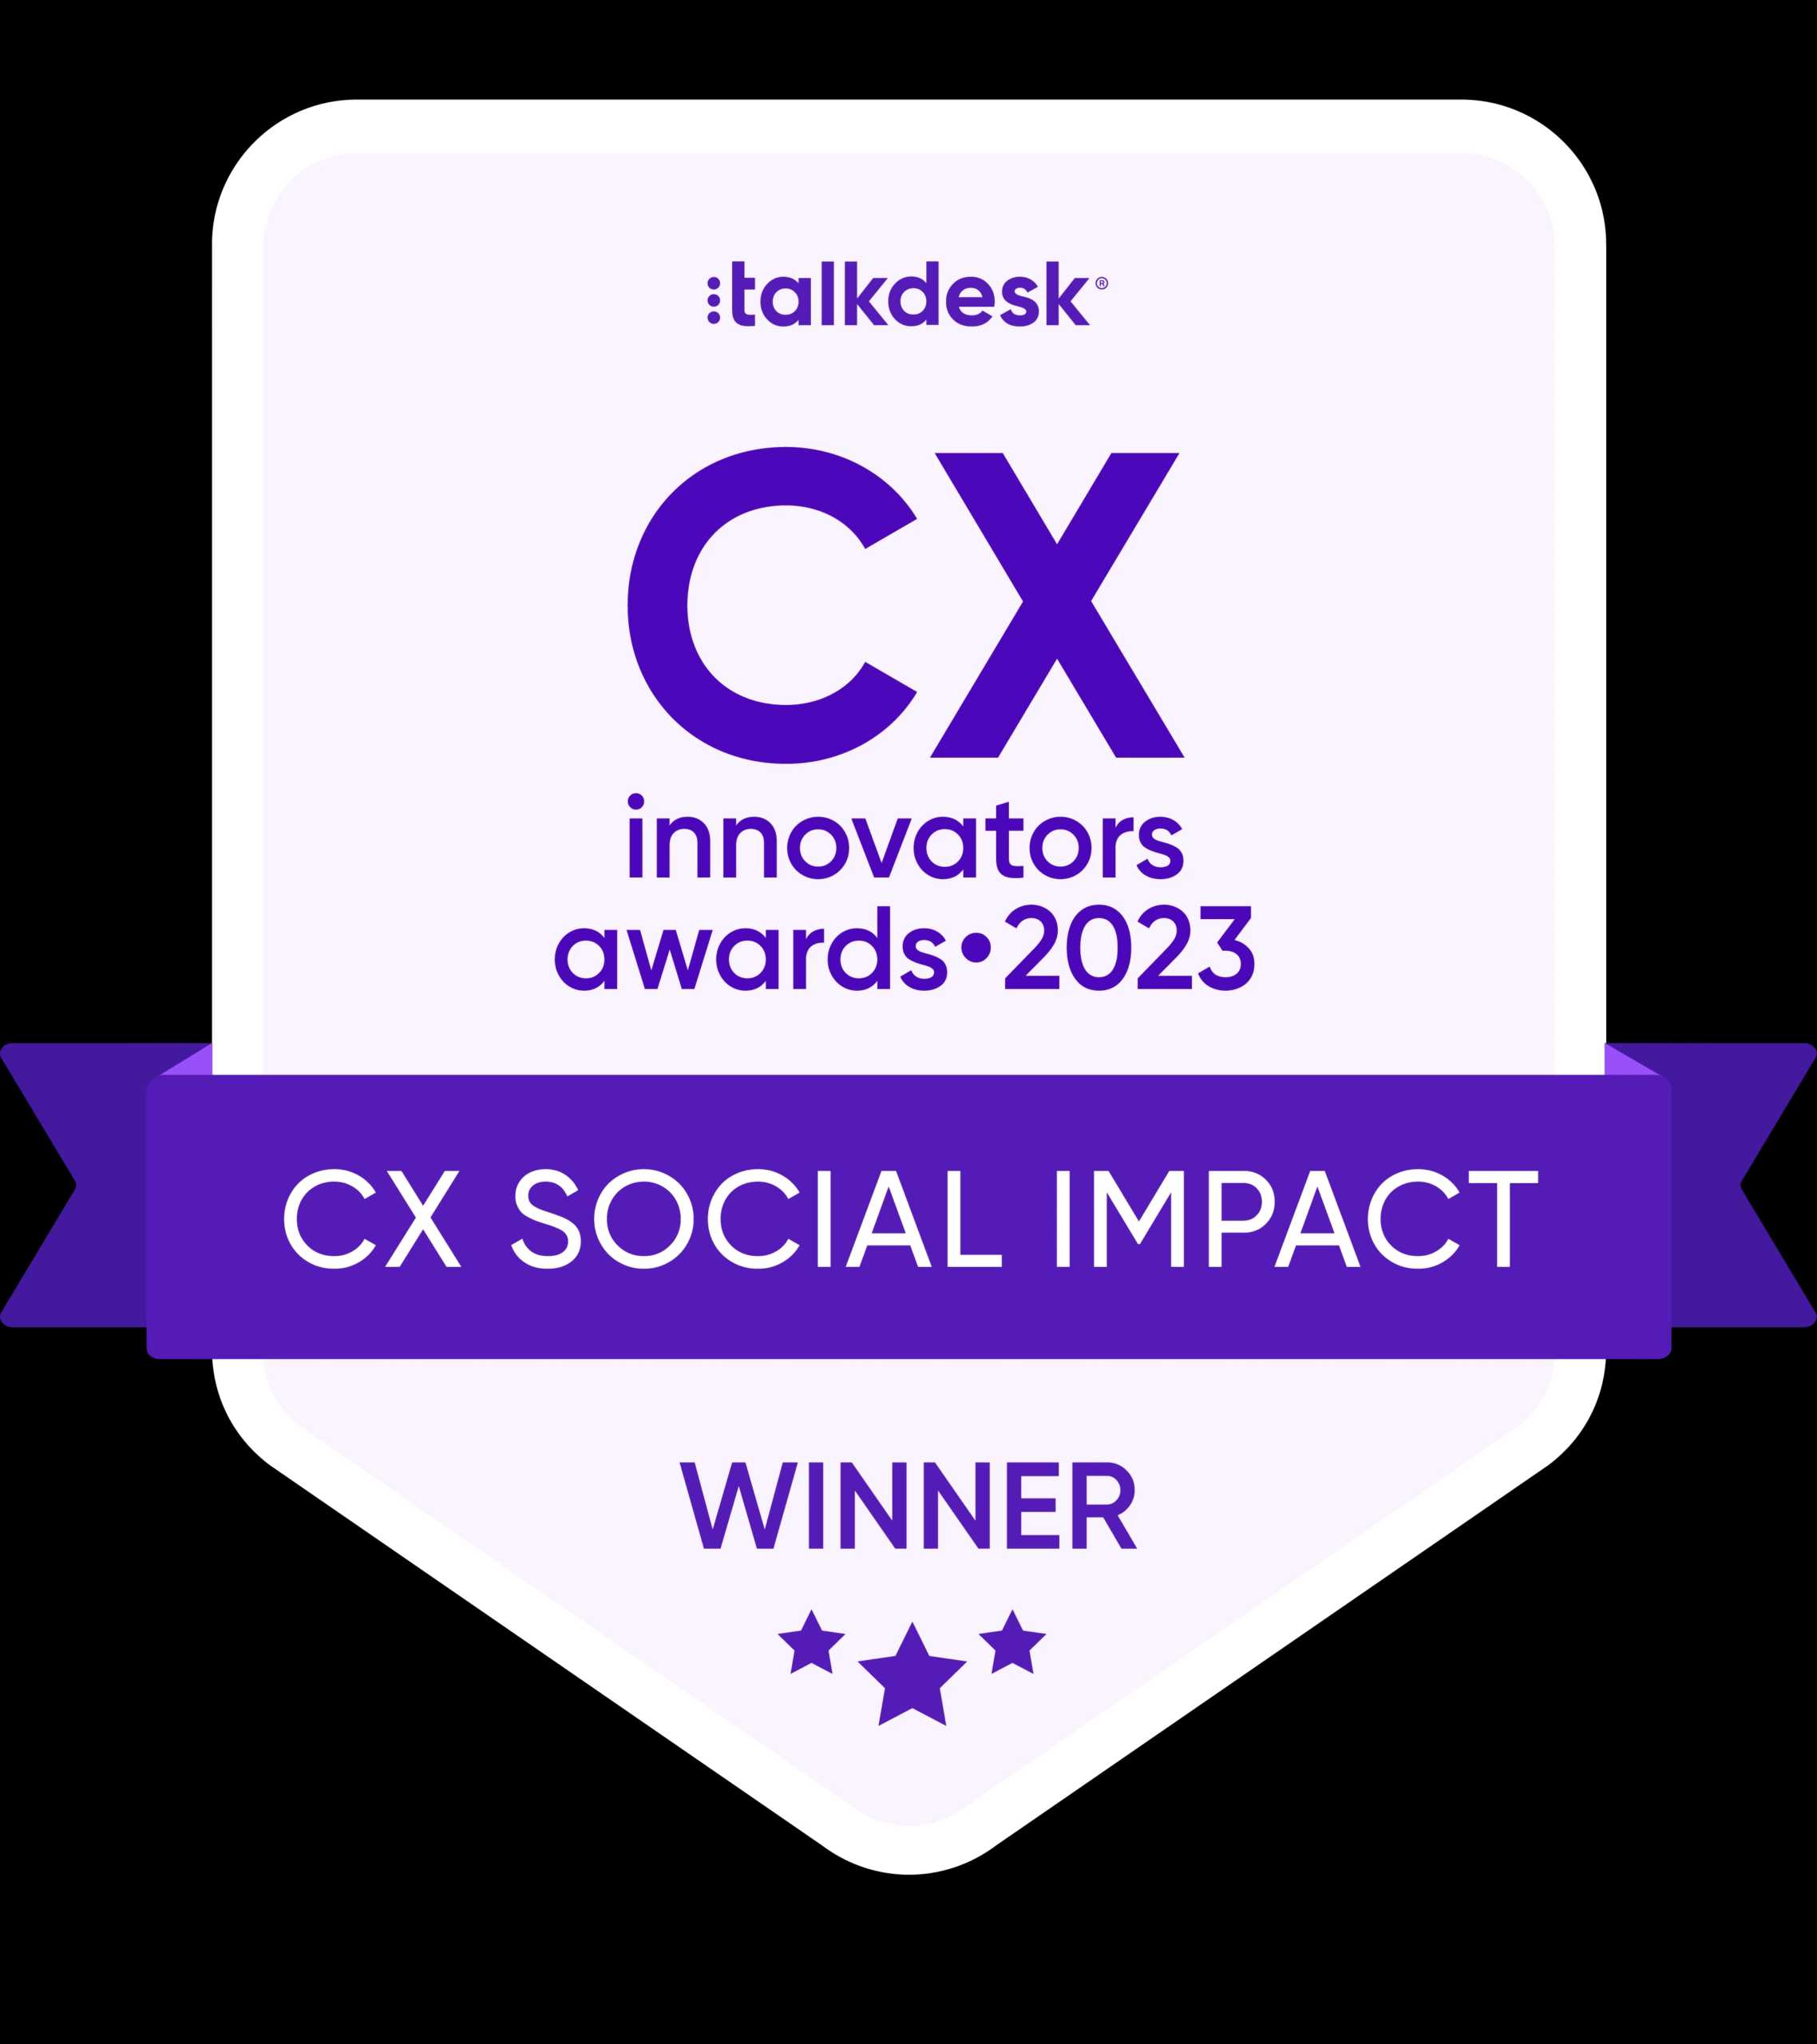 CX Social Impact Awards 2023